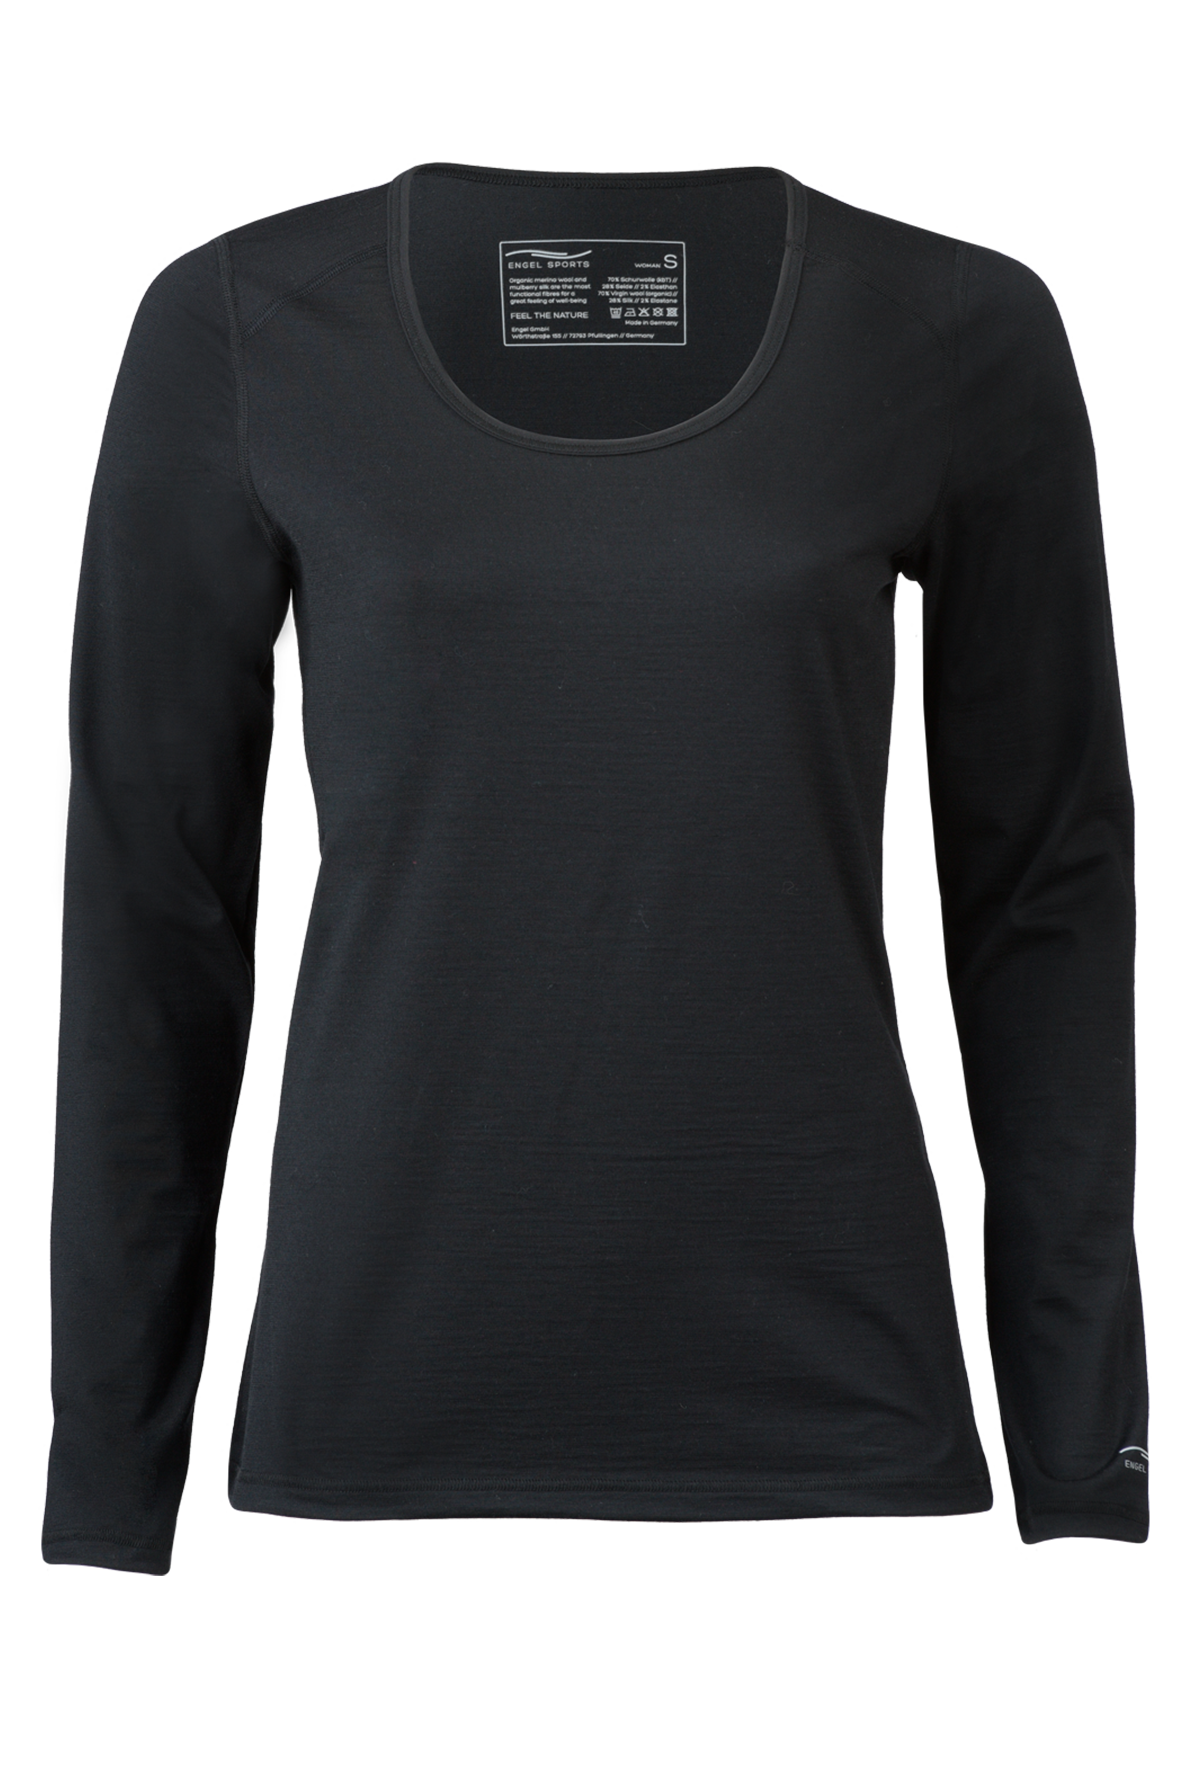 Engel Women's Eco Sport Long Sleeve Shirt, Wool/Silk - Sale - 30% off